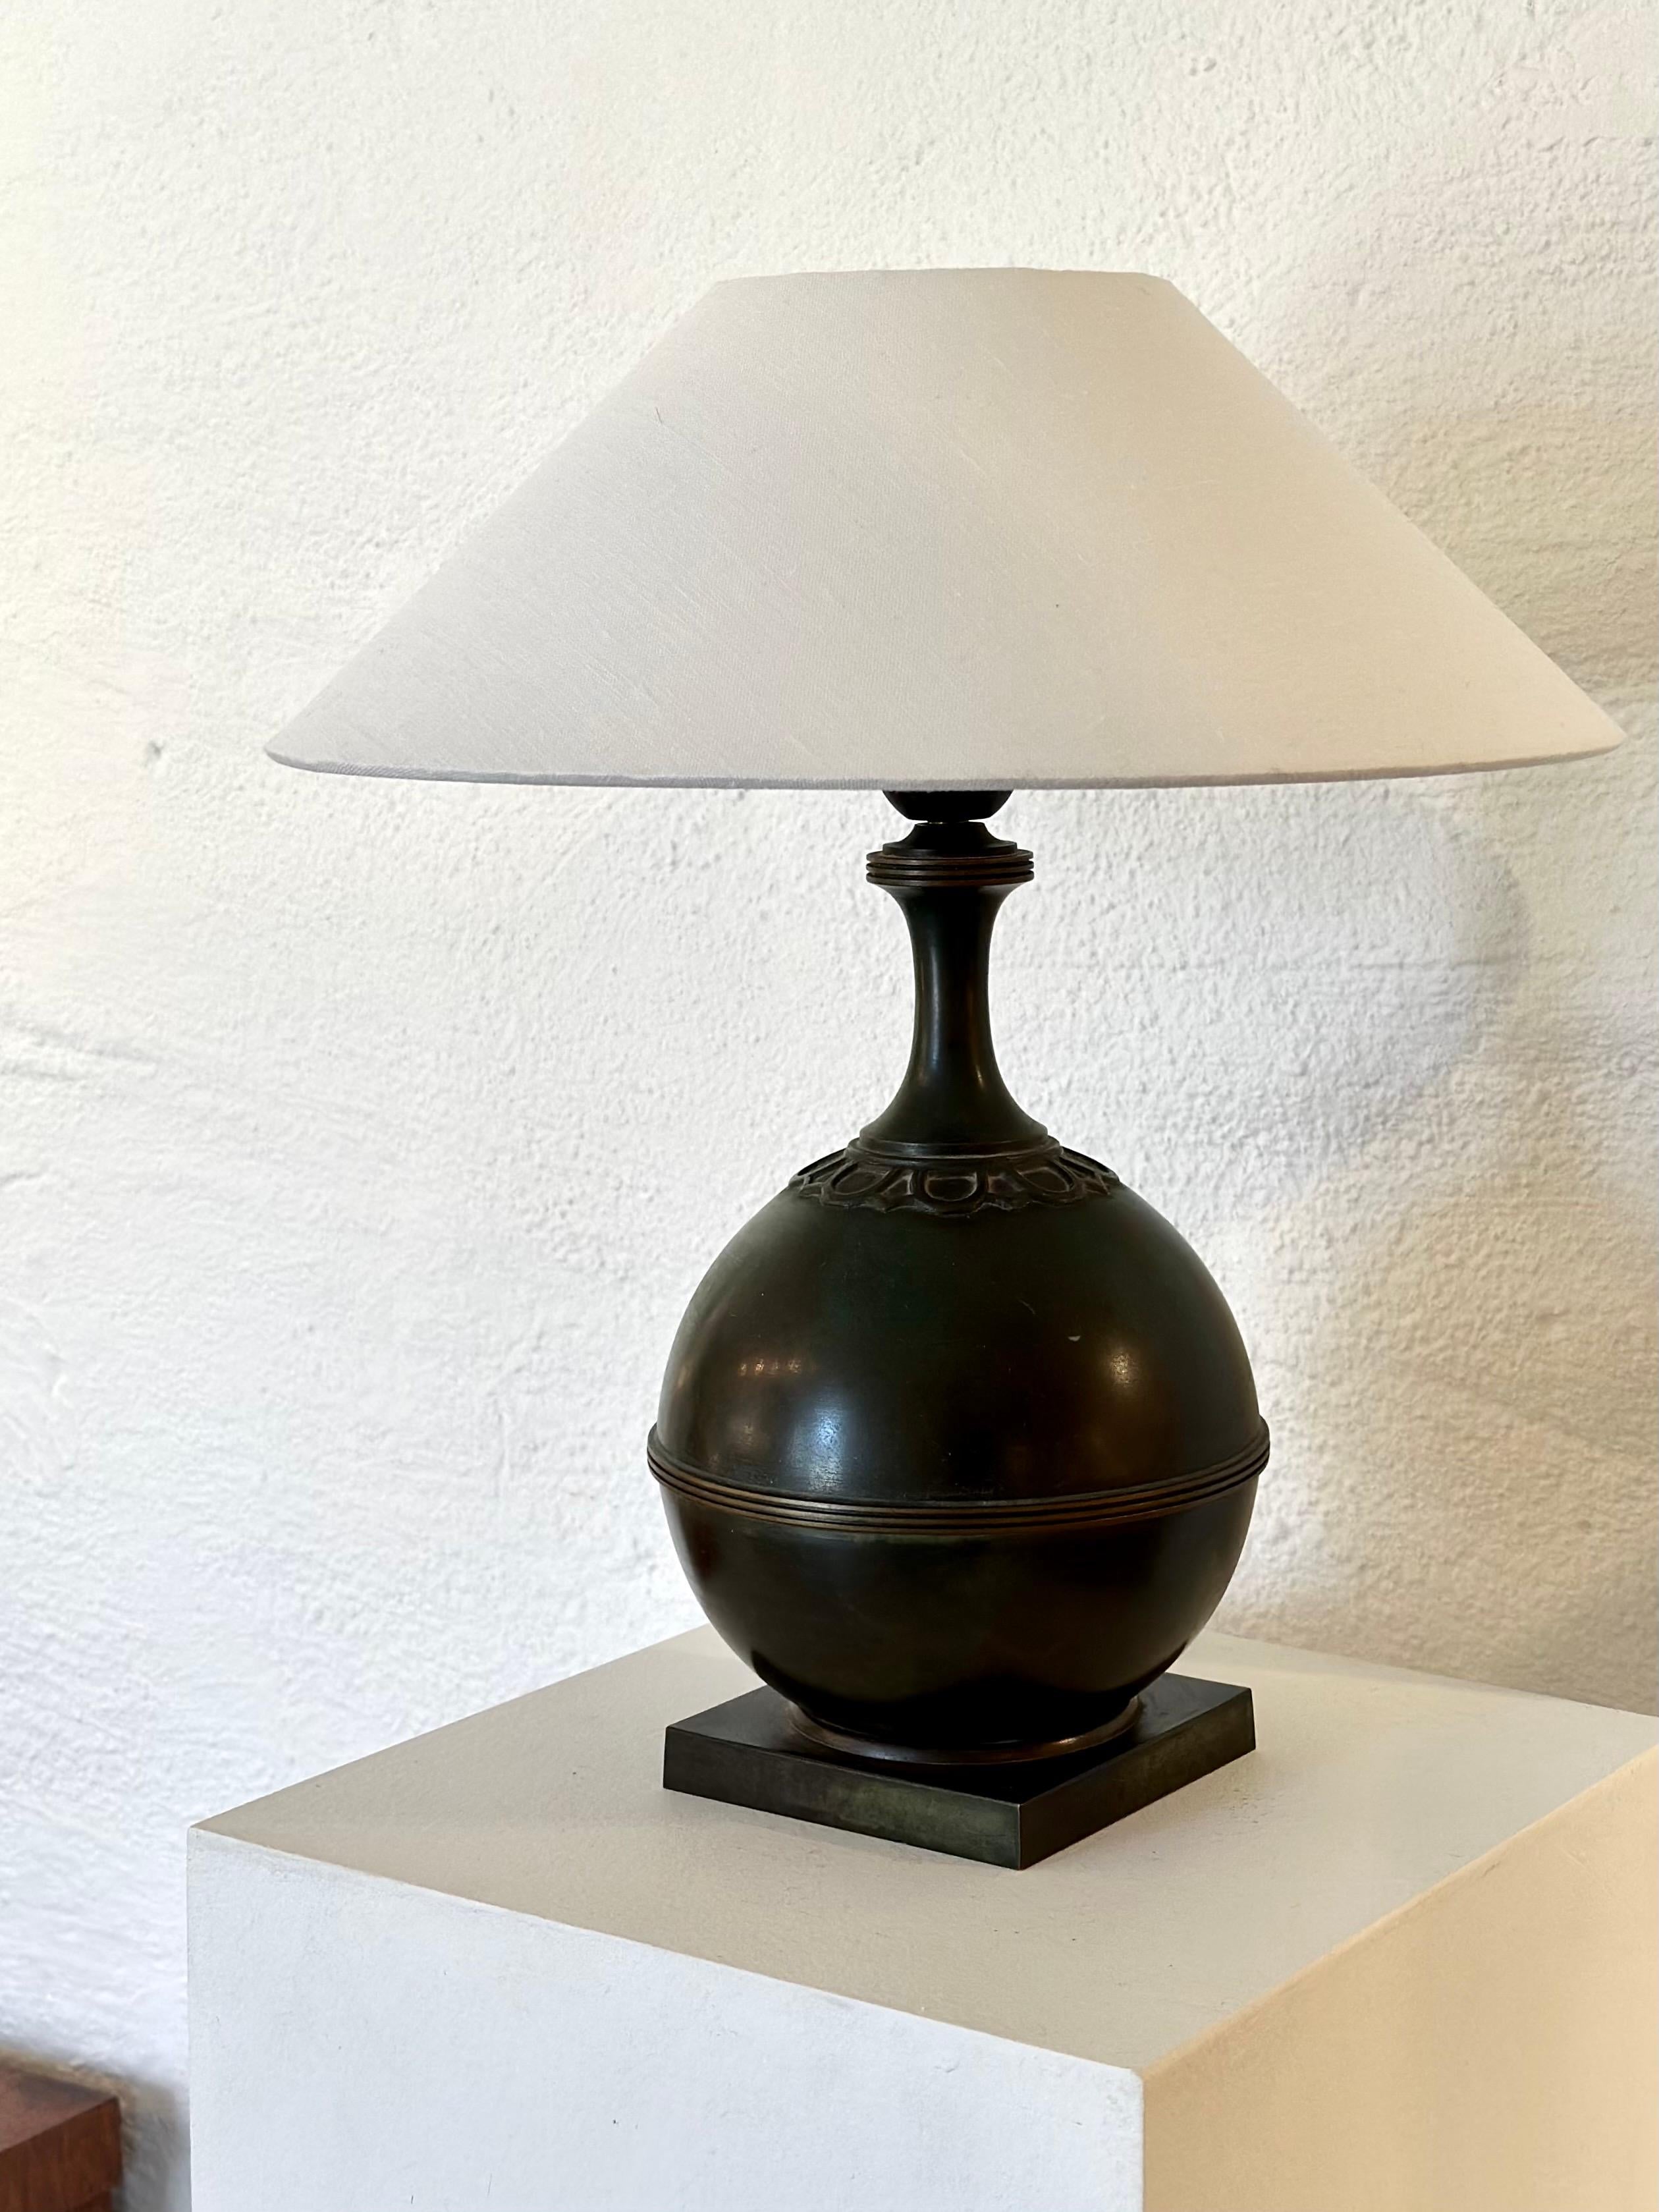 Scandinavian Modern Swedish Modern Patinated Bronze Table Lamp by GAB Guldsmedsaktiebolaget, 1930s For Sale